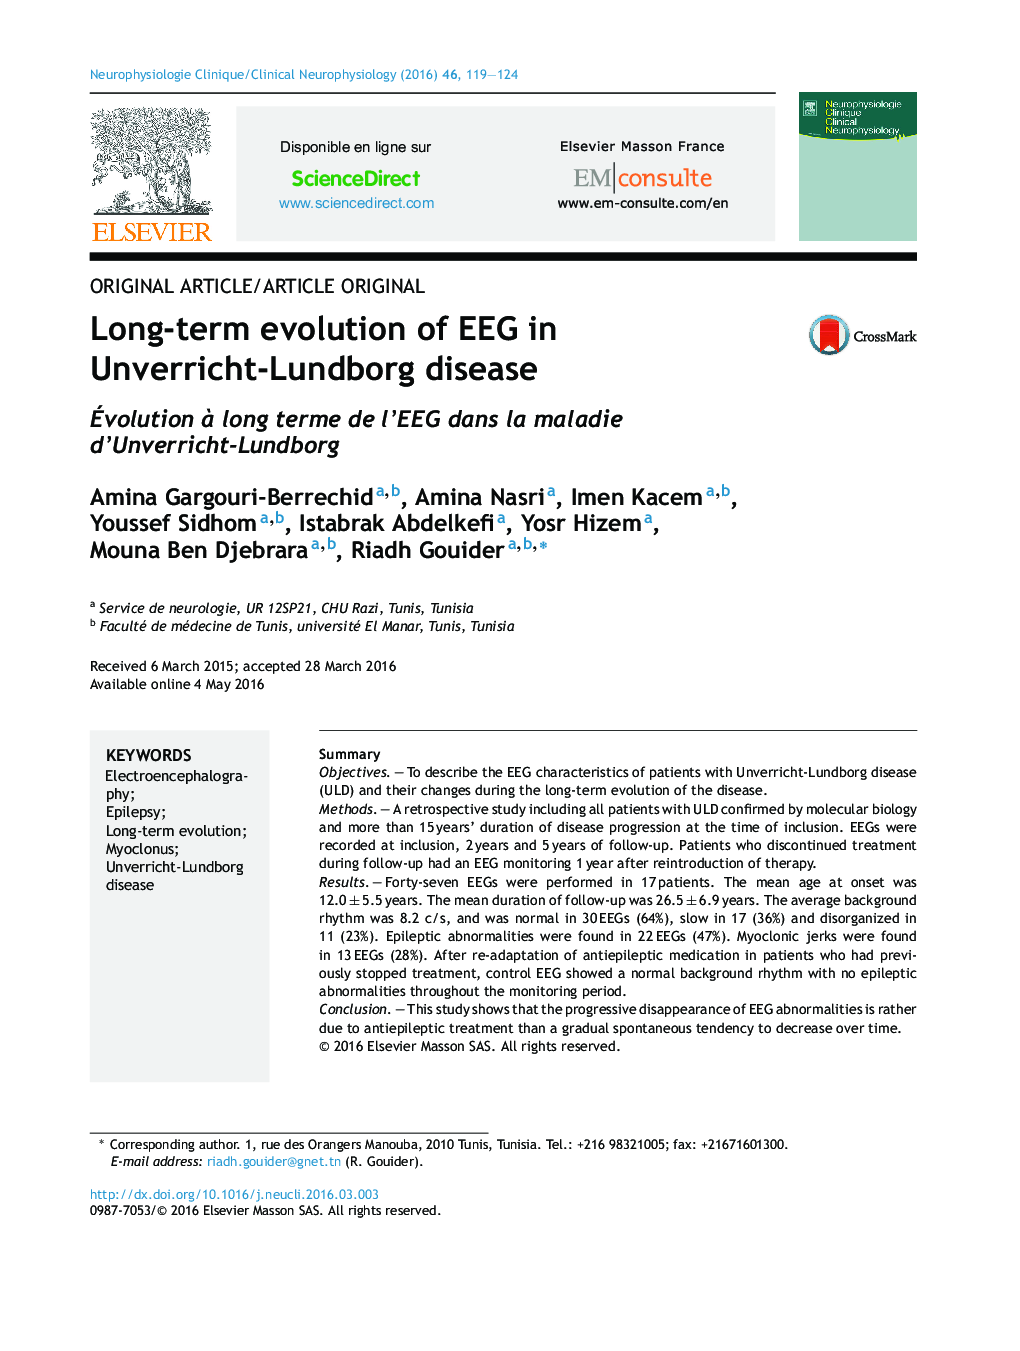 Long-term evolution of EEG in Unverricht-Lundborg disease